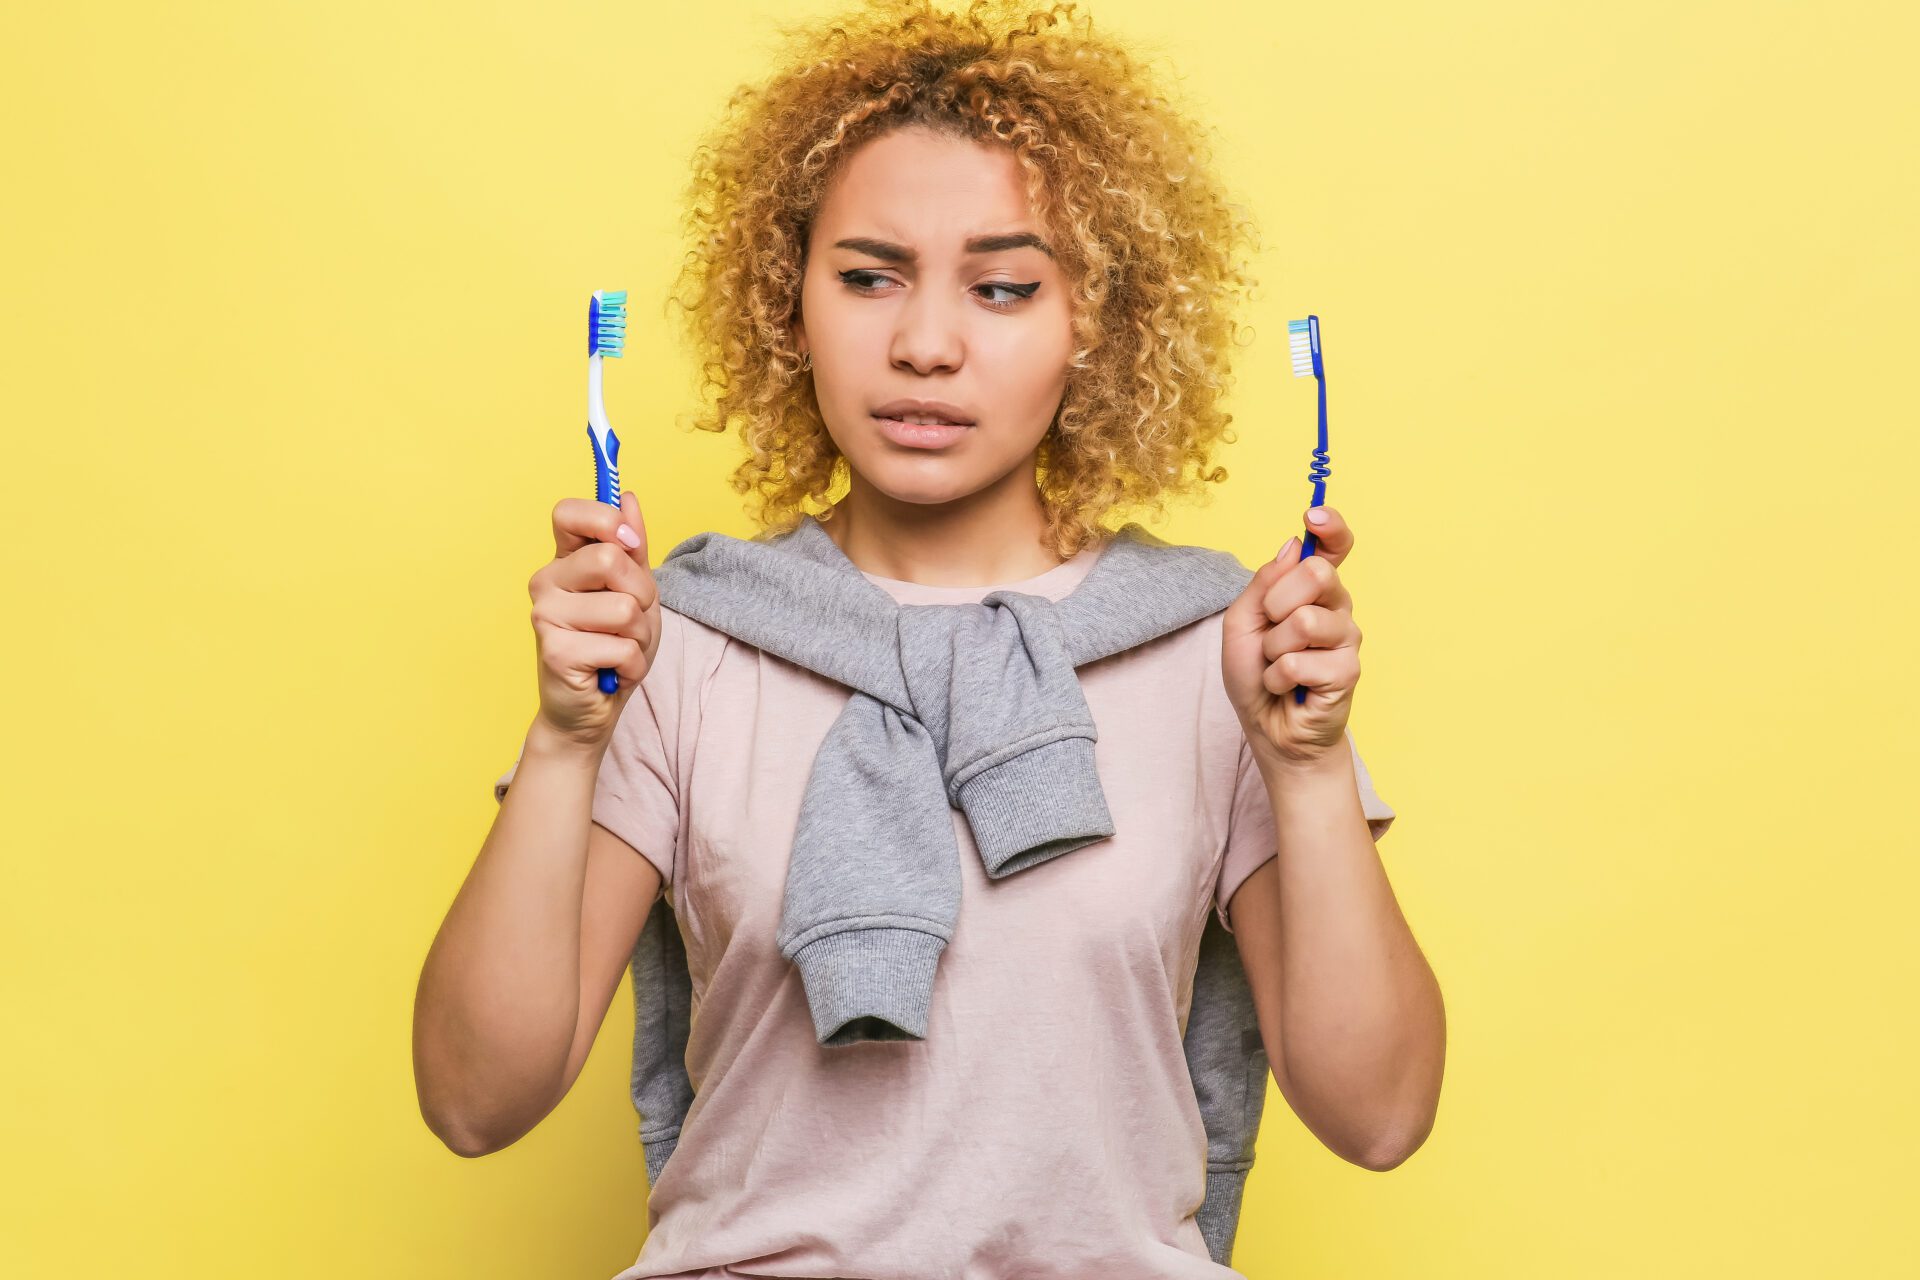 bag tandpasta: Hvordan fluor virker for at forhindre huller - Chemwatch